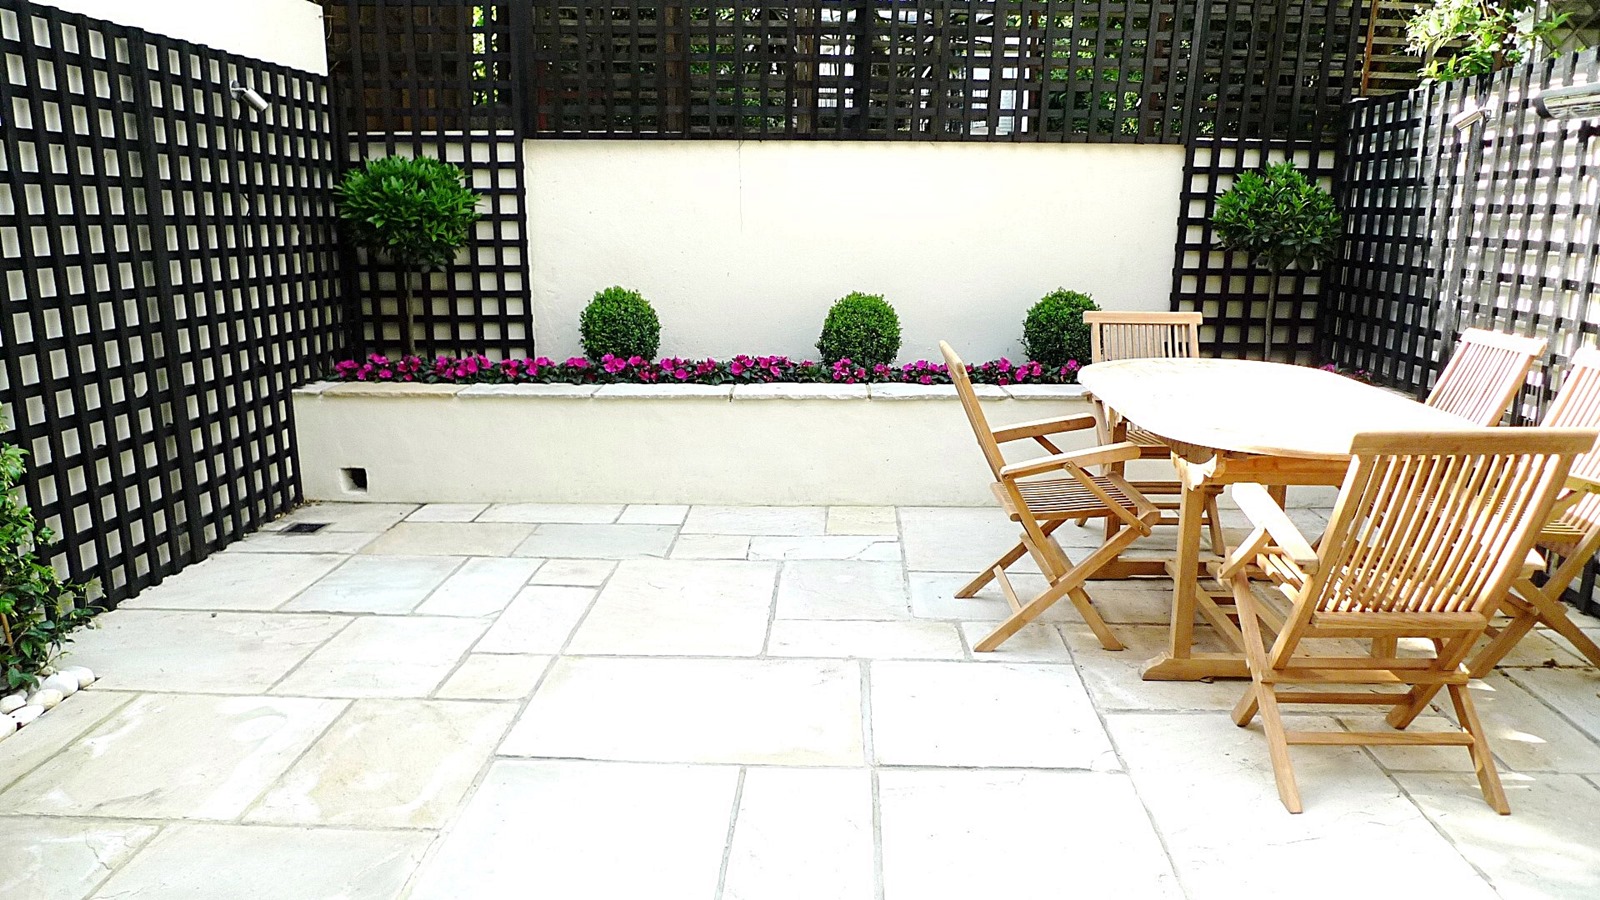 Sandstone paving patio raised beds classic modern planting ...